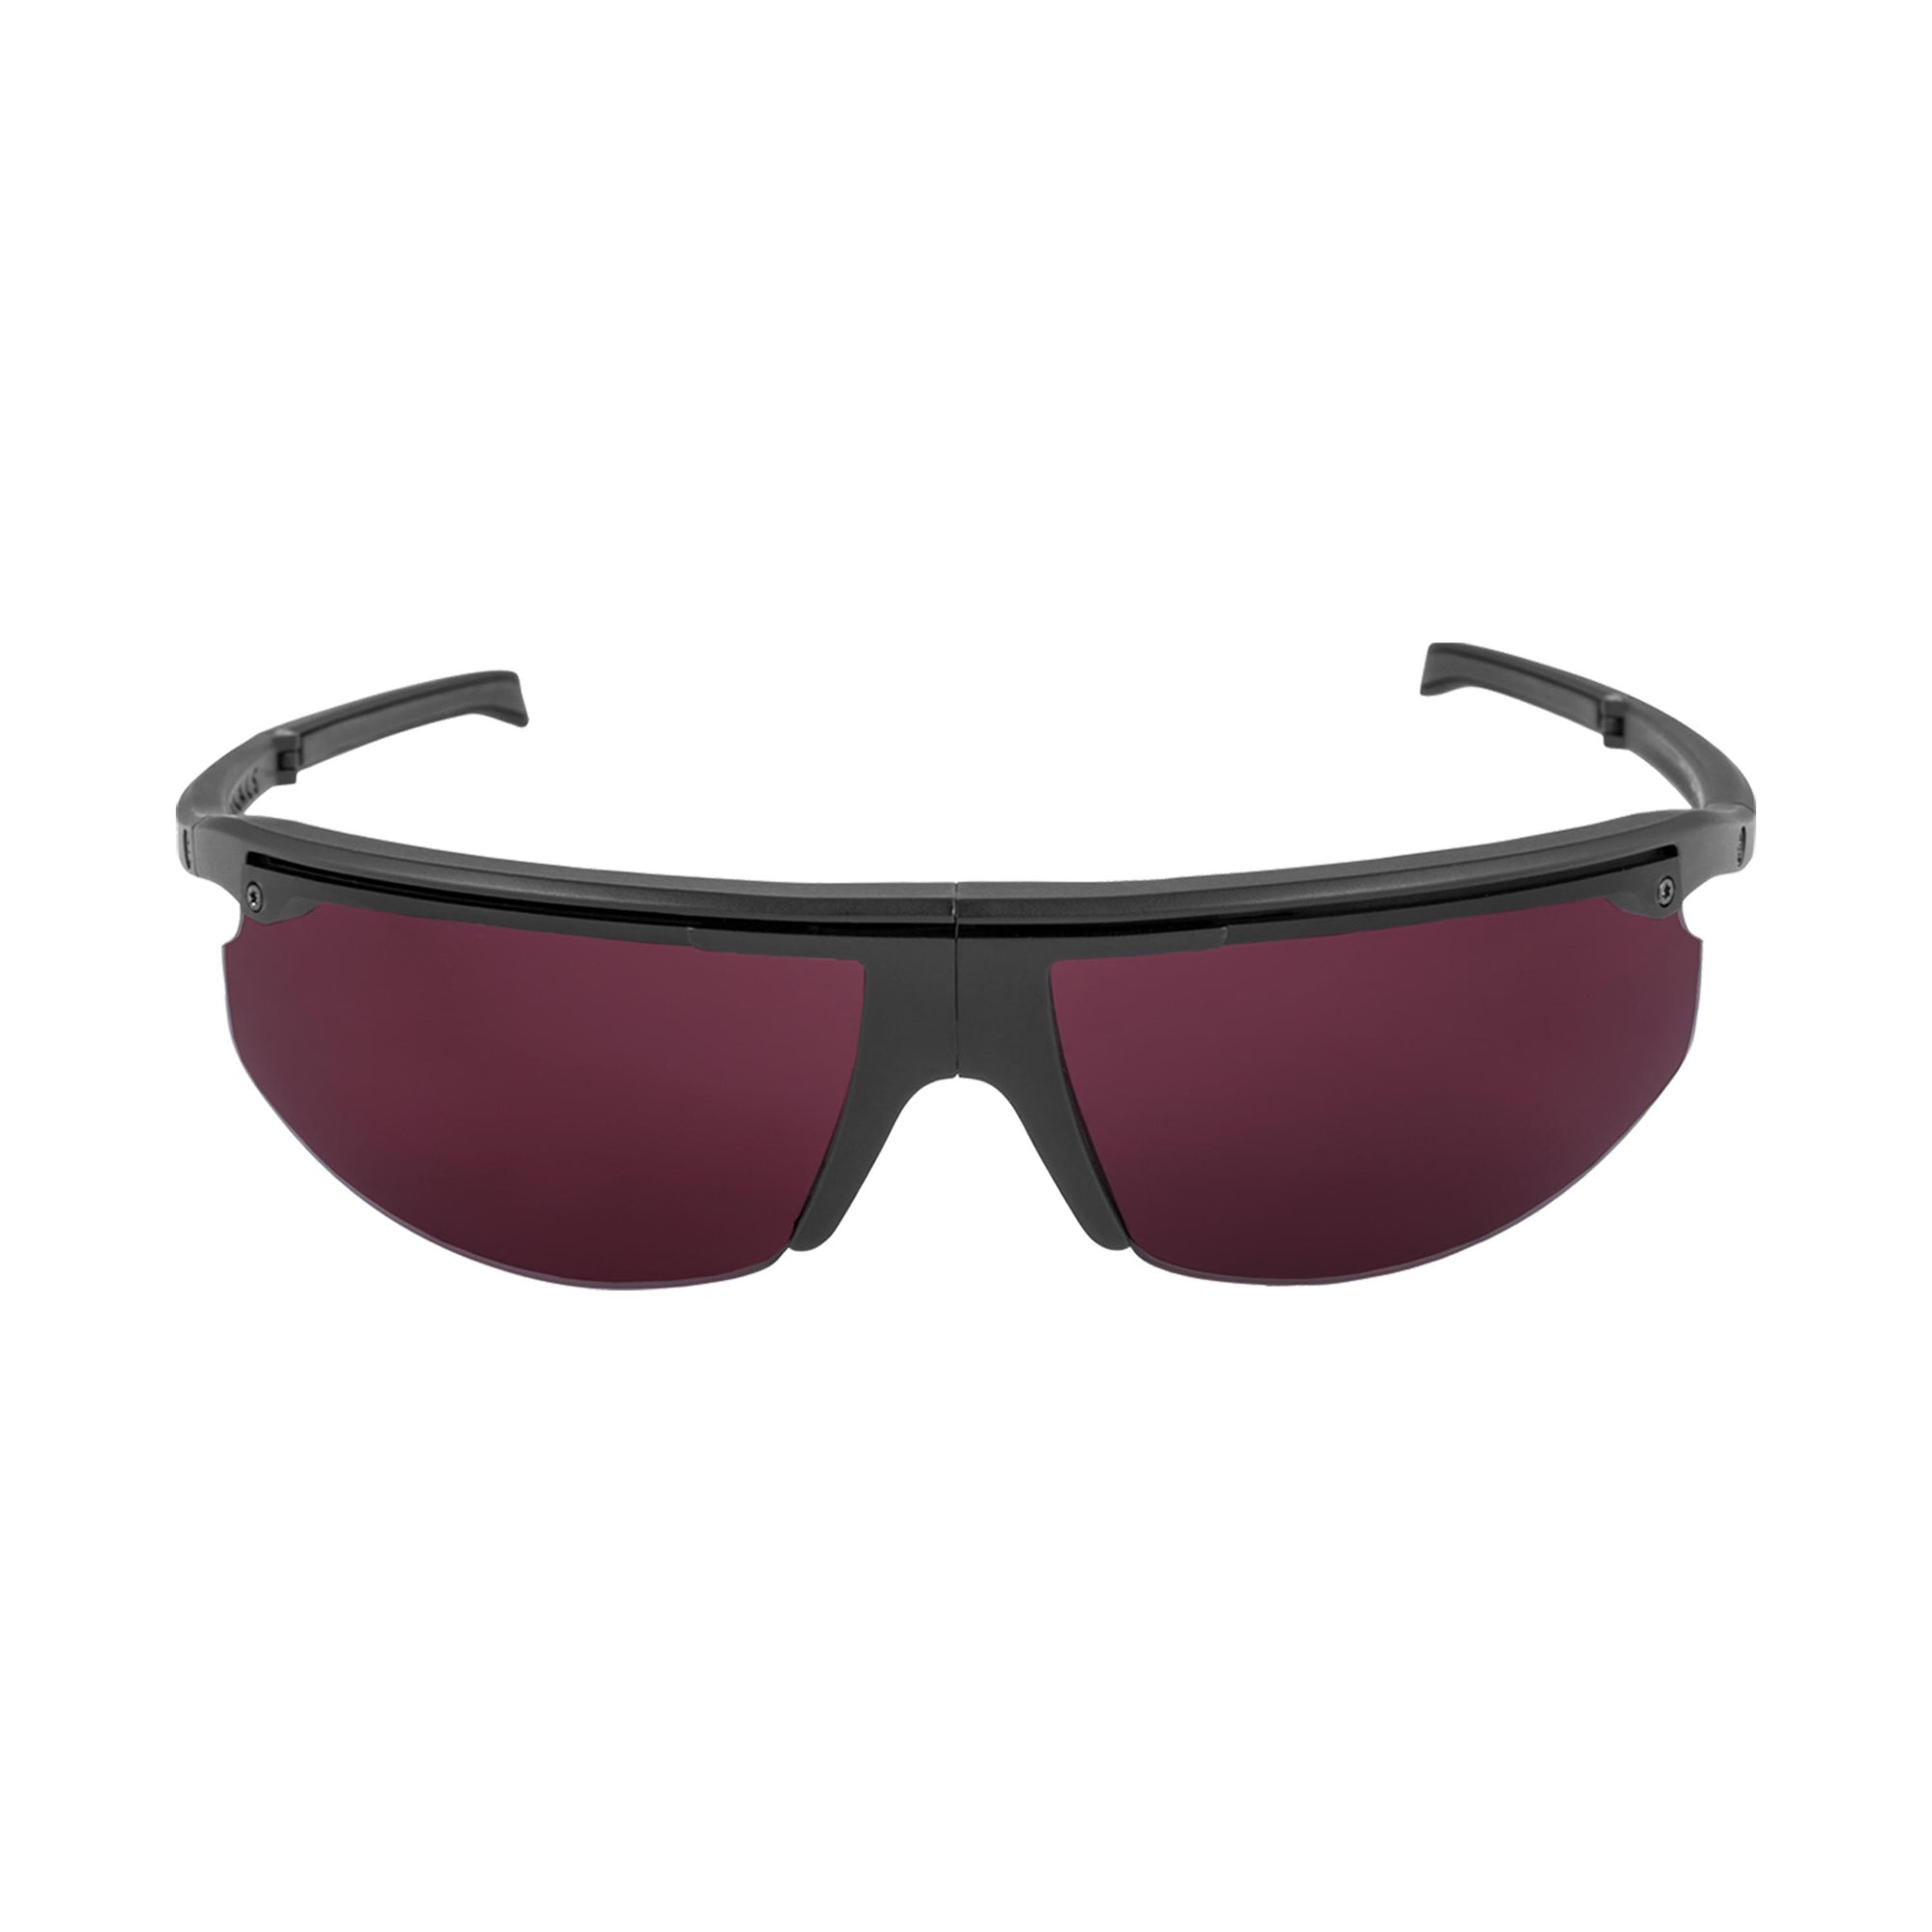 Popticals, Premium Compact Sunglasses, PopStar, 200040-BMPS, Standard Golf Sunglasses, Matte Black Frame, Purple Golf Lenses, Front View